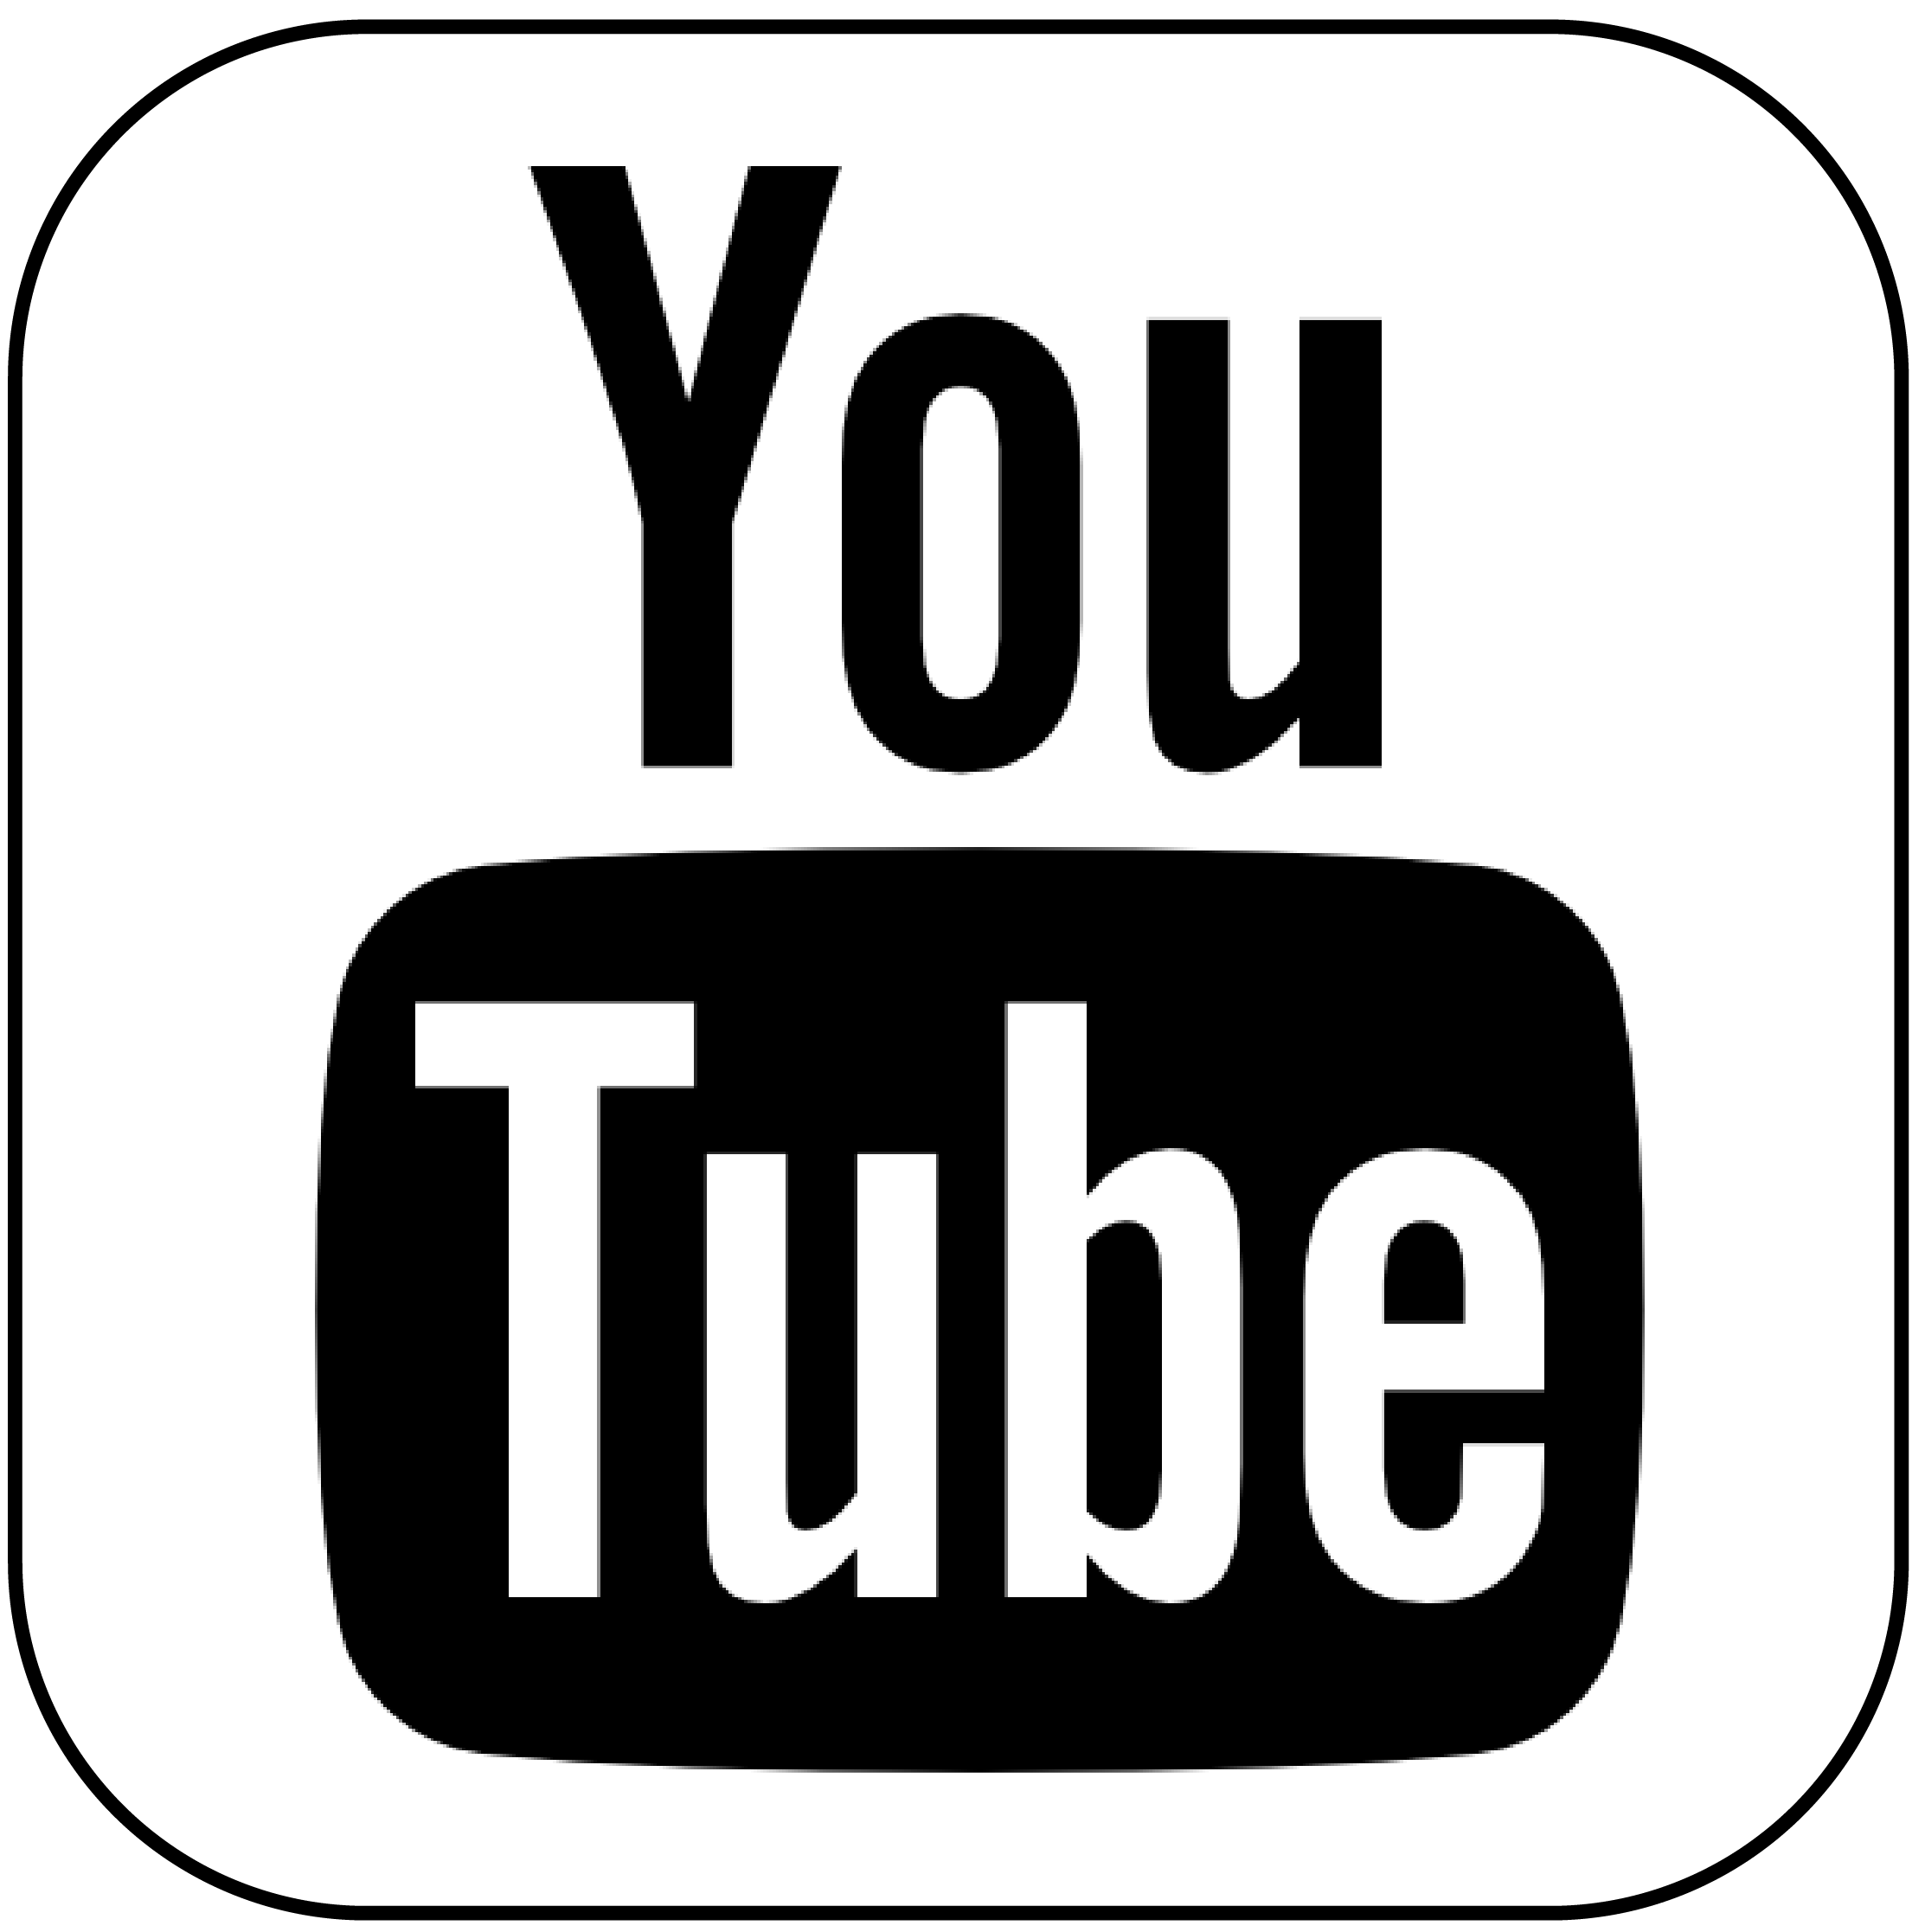 youtube logo ramka 01 01 01 1